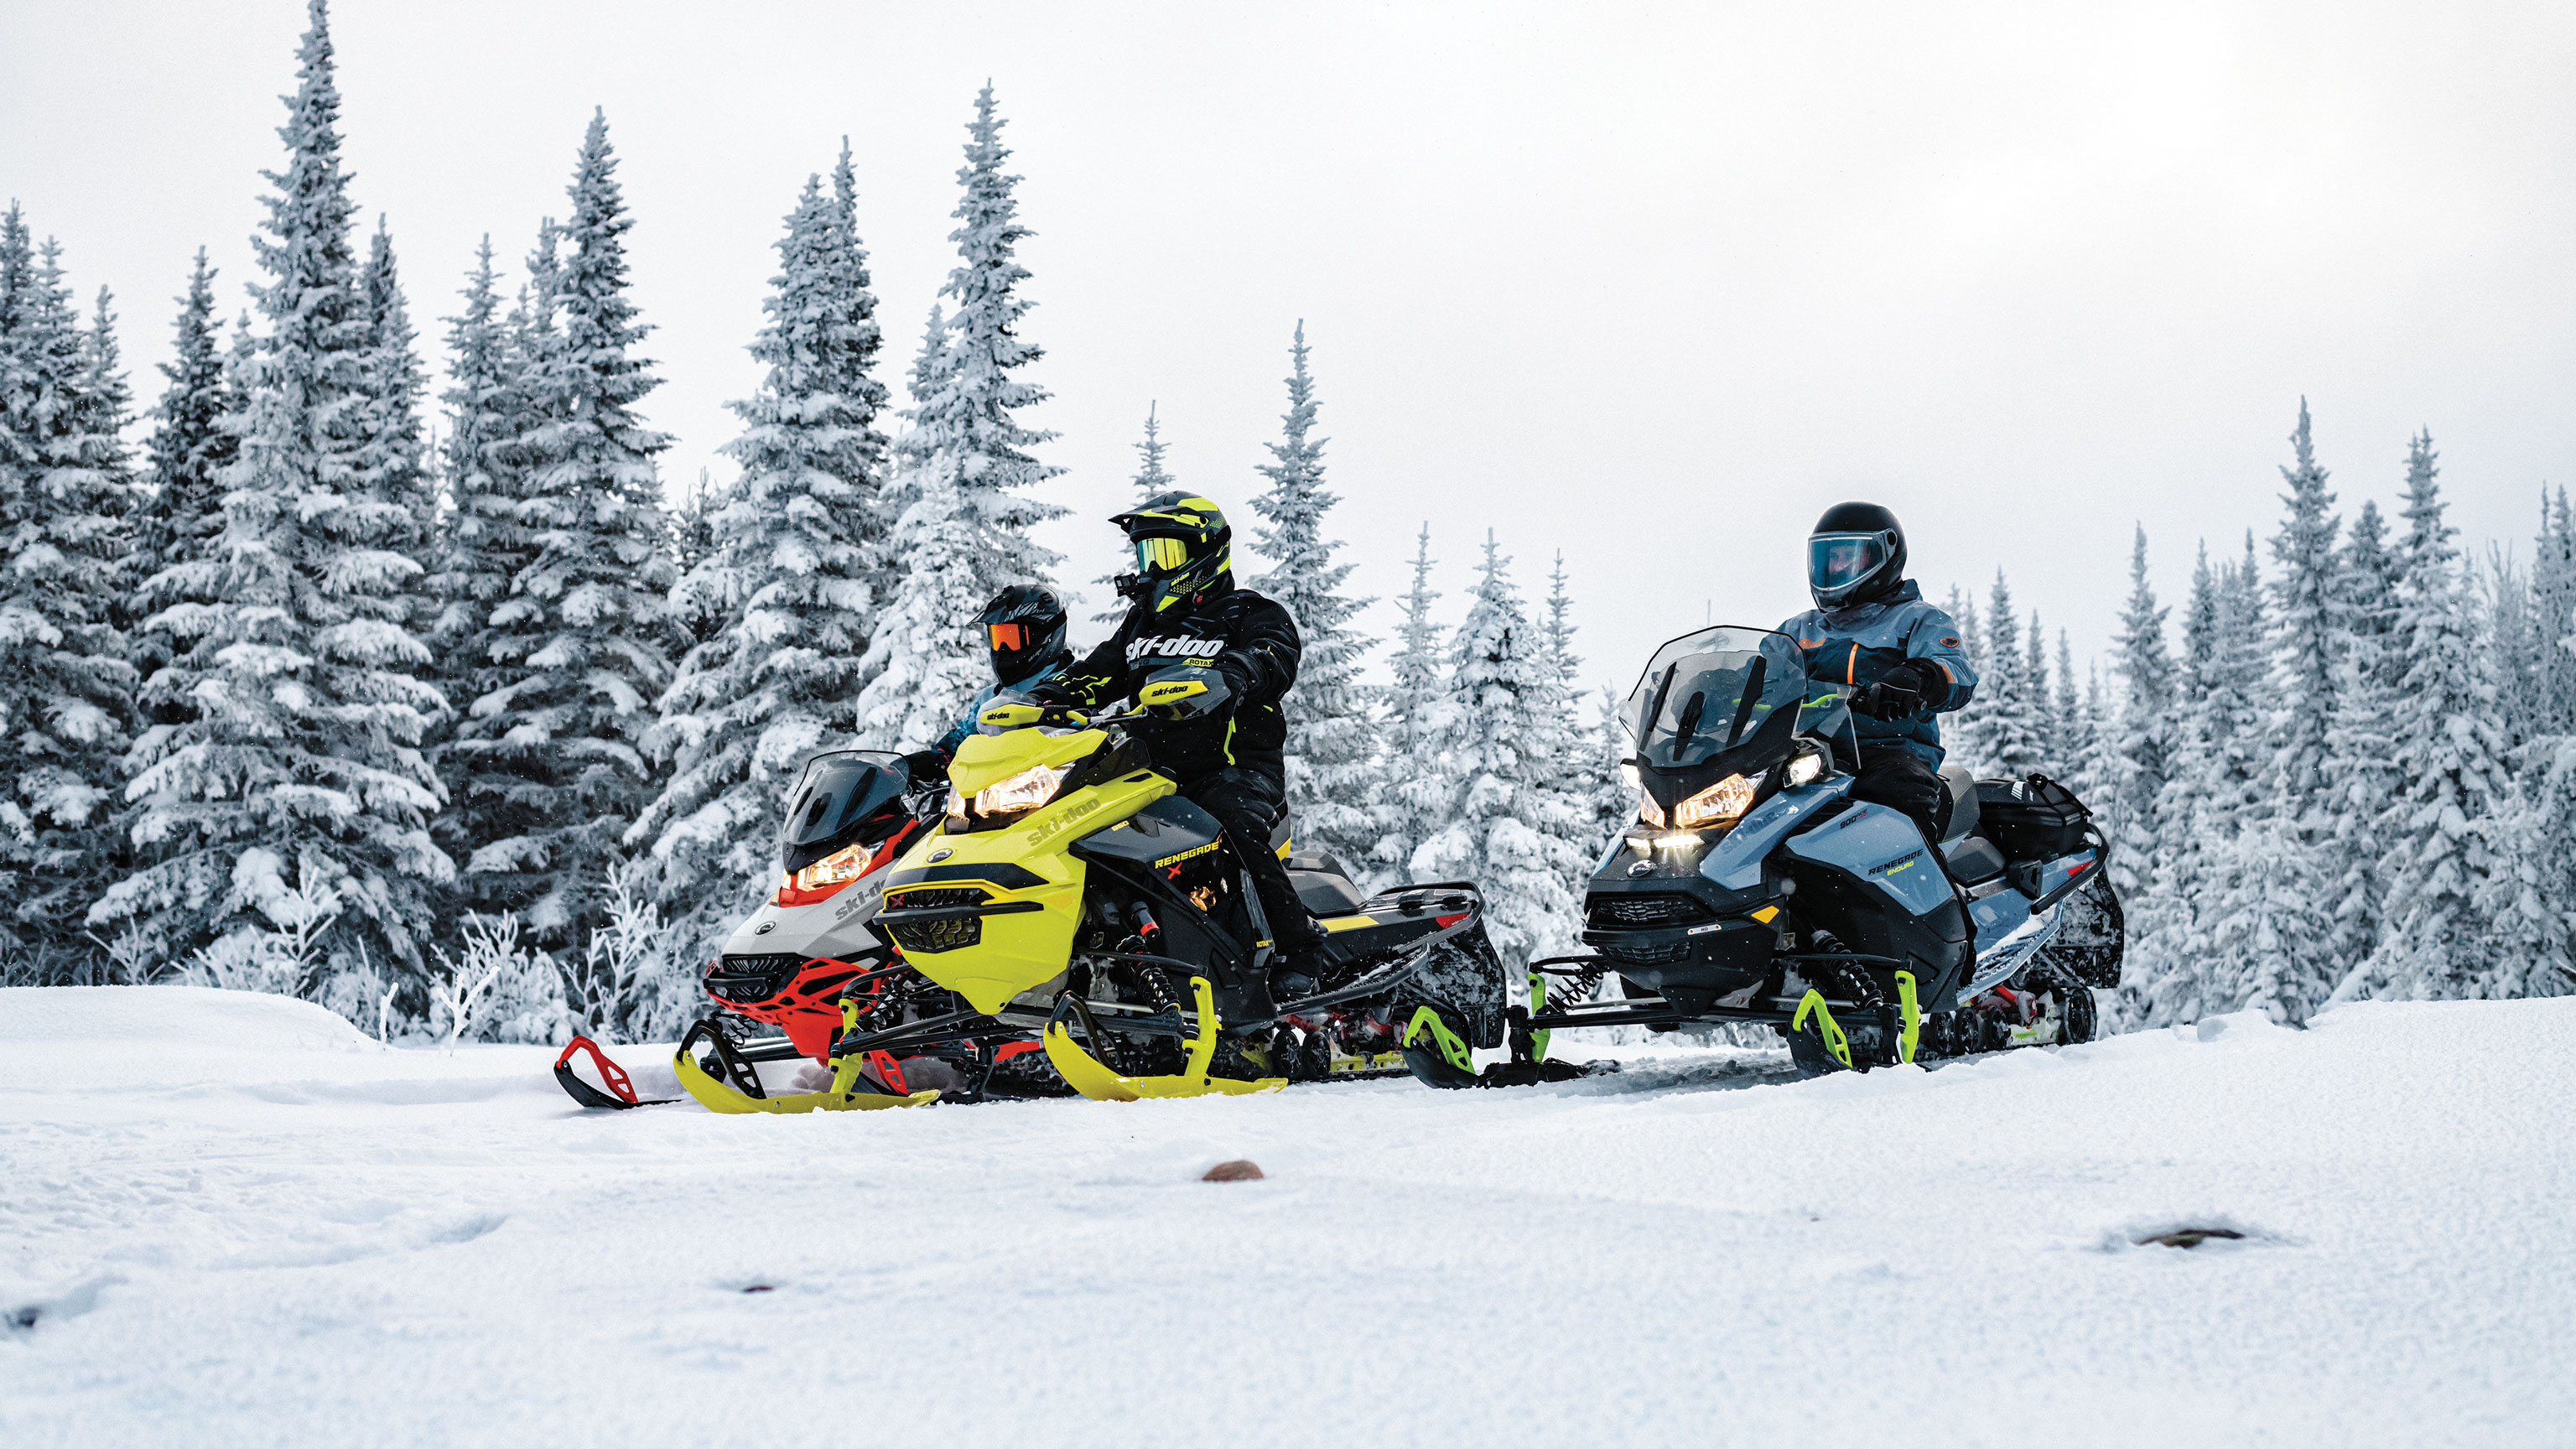 Groupe of riders on their Ski-doo Snowmobiles